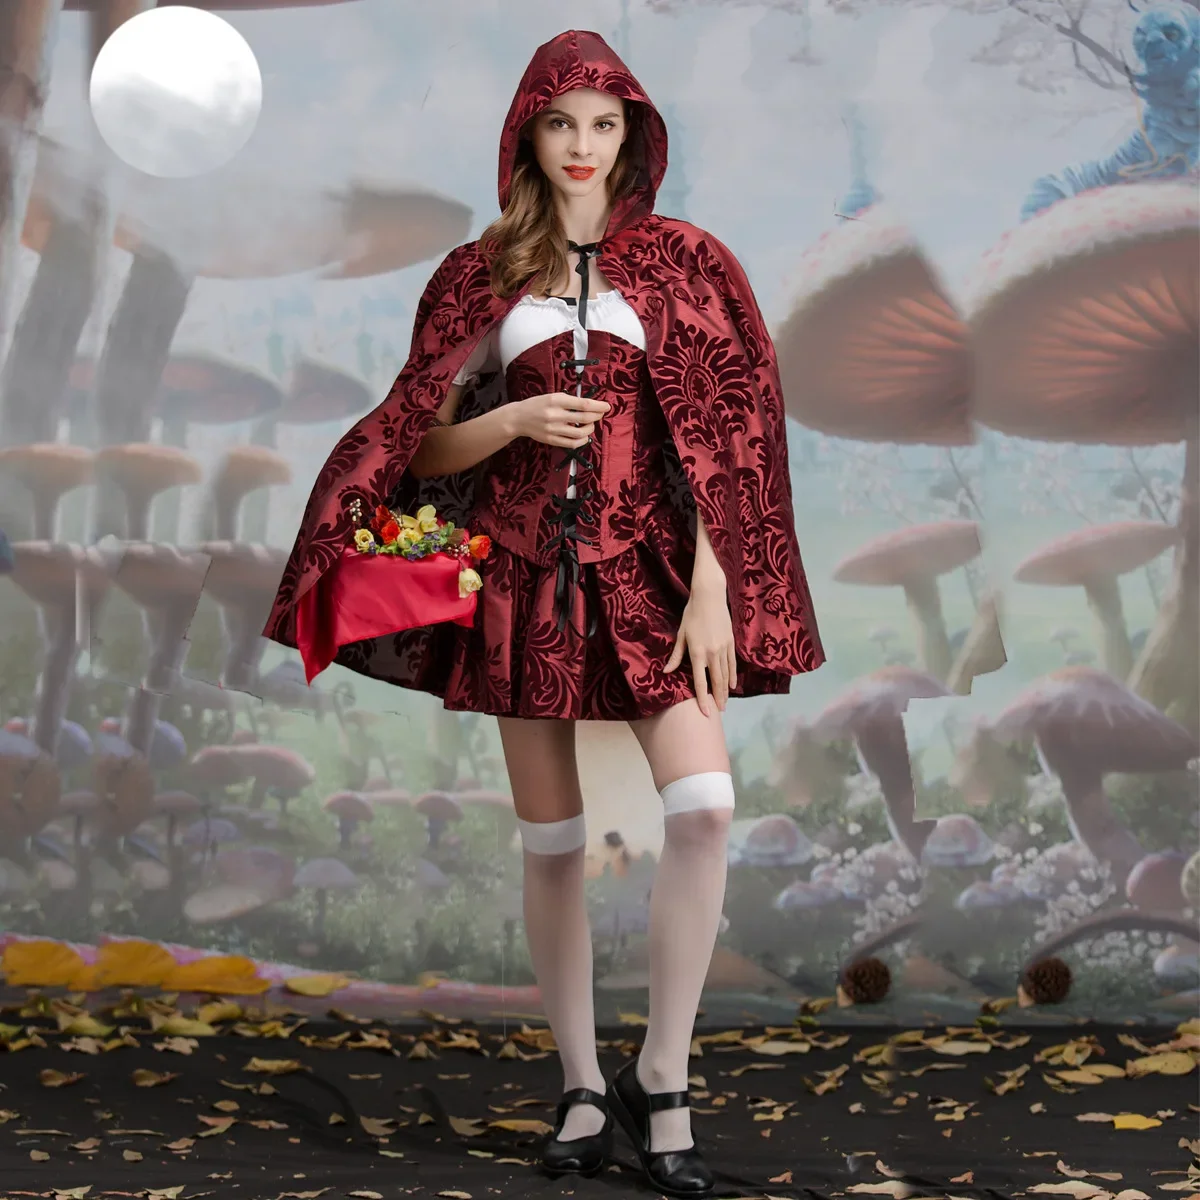 

Halloween Costume Printed Little Red Riding Hood Adult Dress Big Bad Wolf Fairy Tale Princess Dress Stage Costume